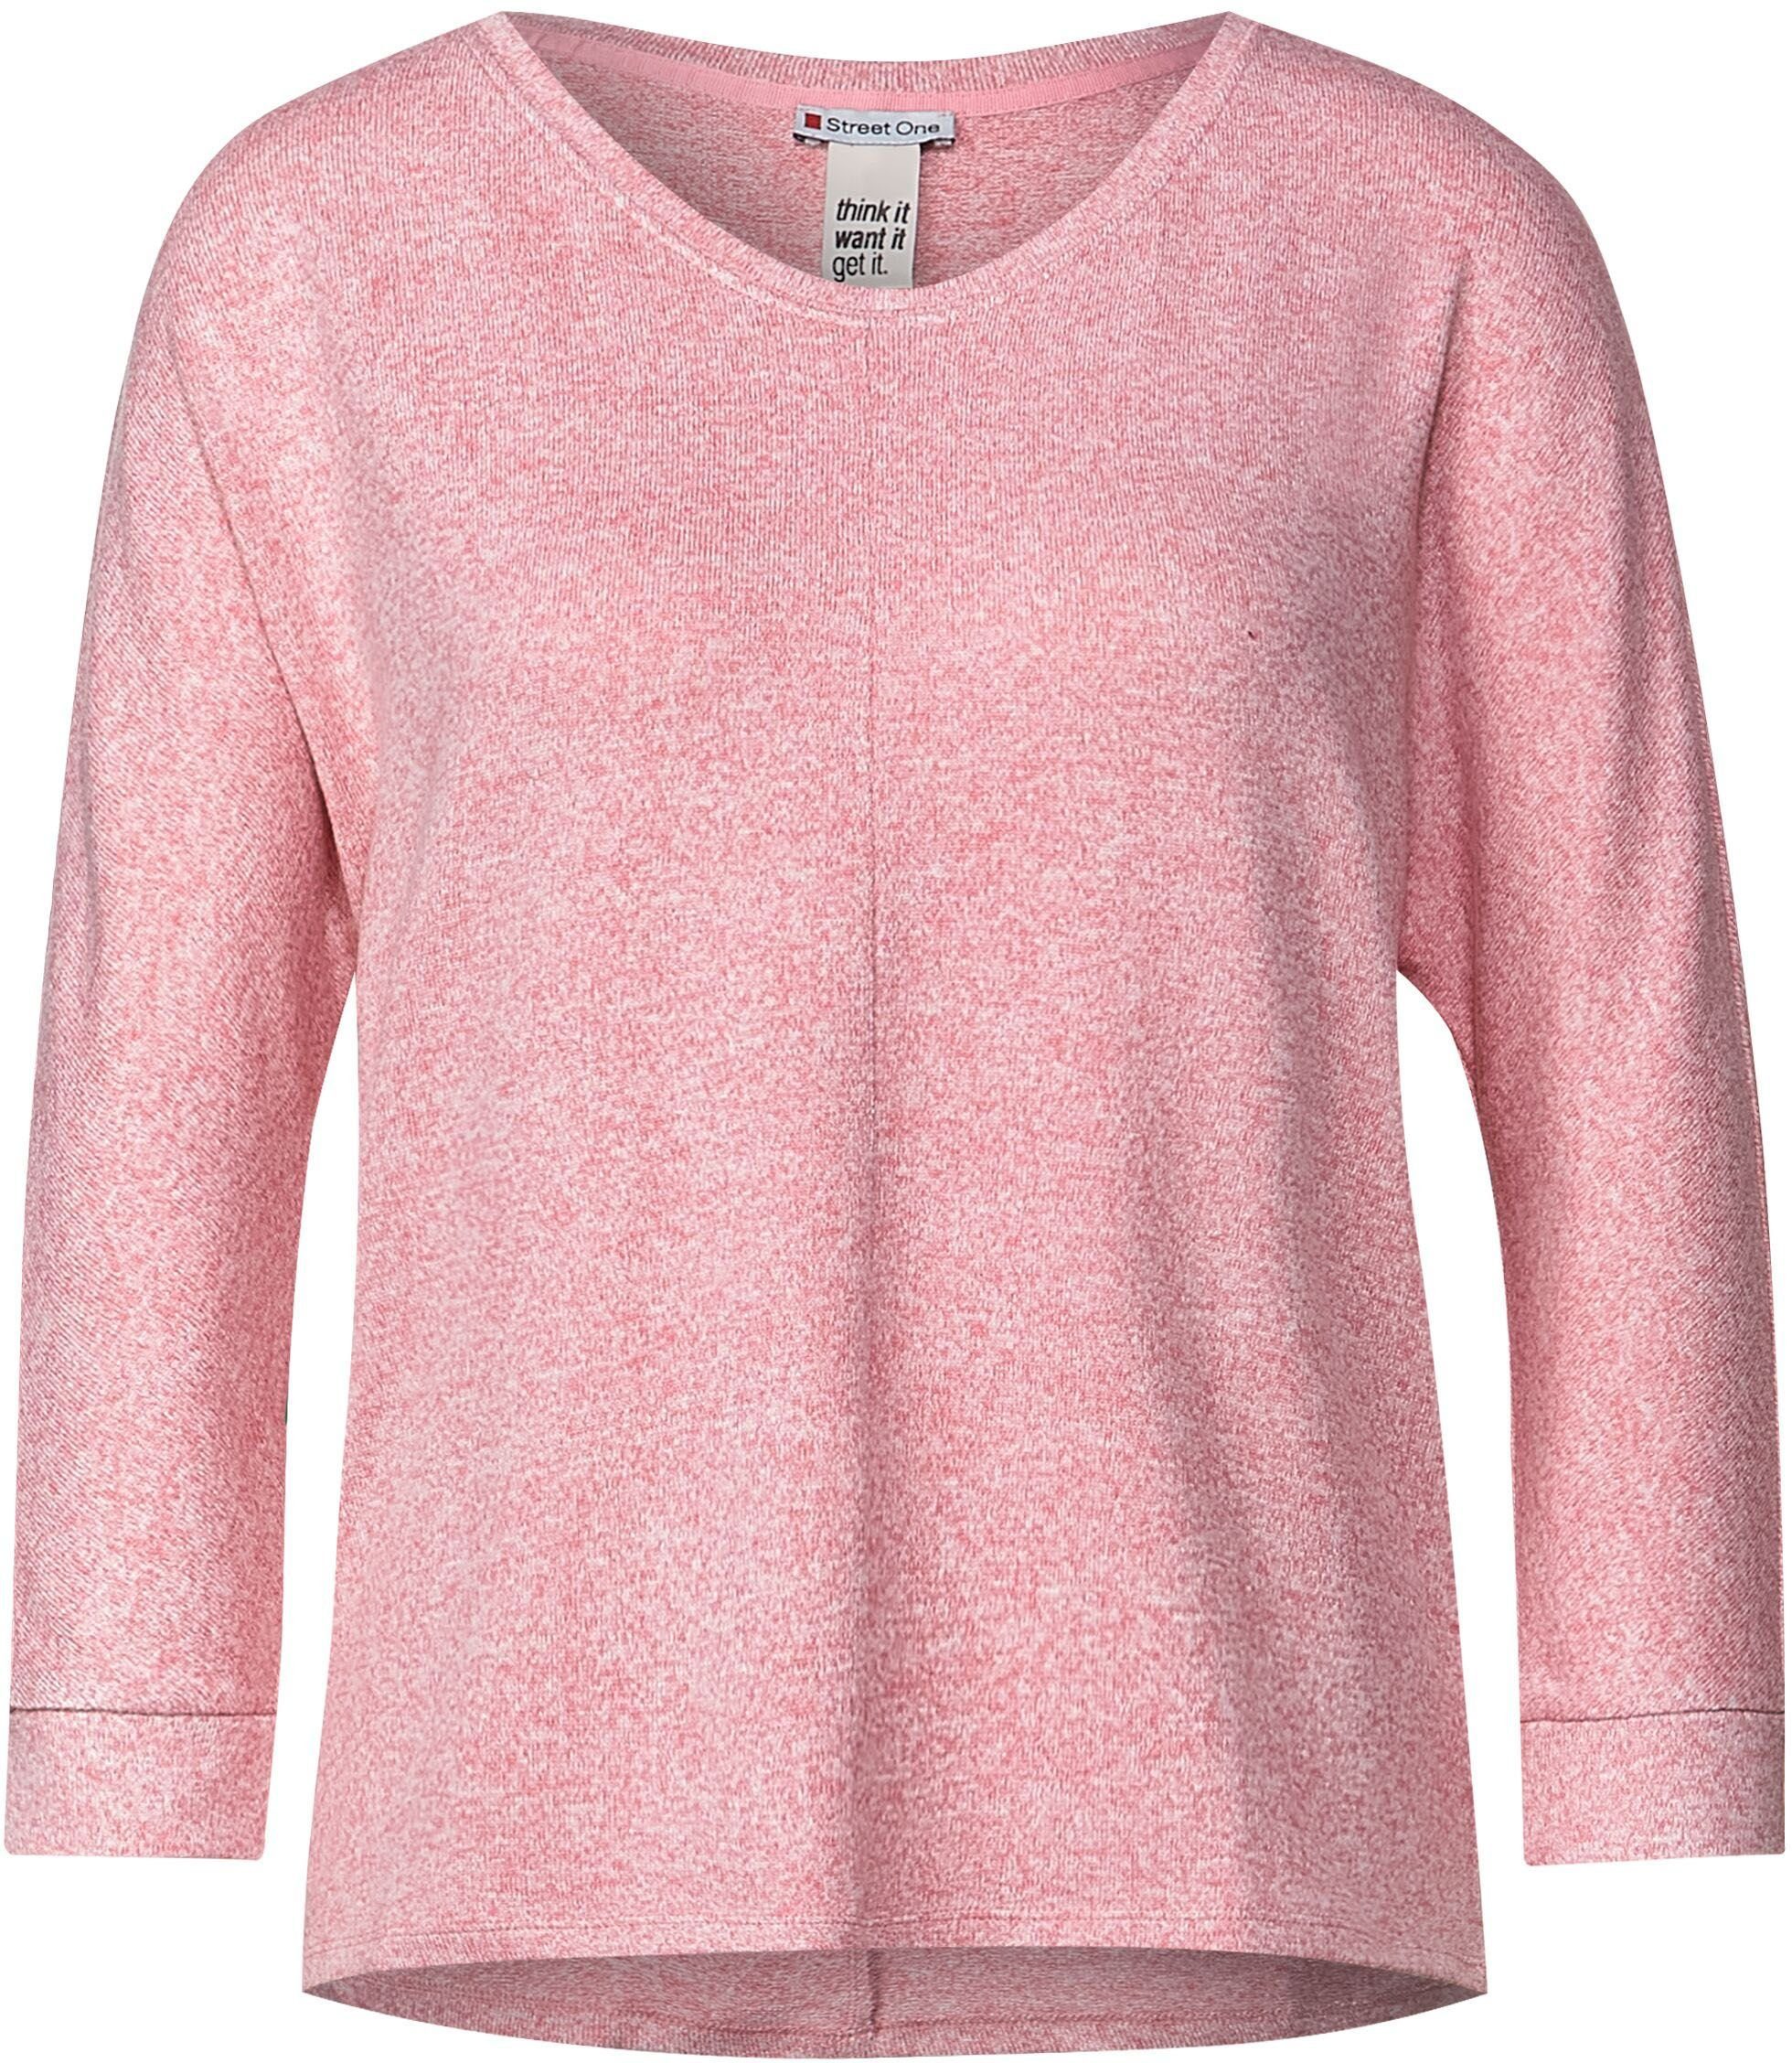 Style winter STREET ONE Melange-Optik in rose 3/4-Arm-Shirt melange Ellen